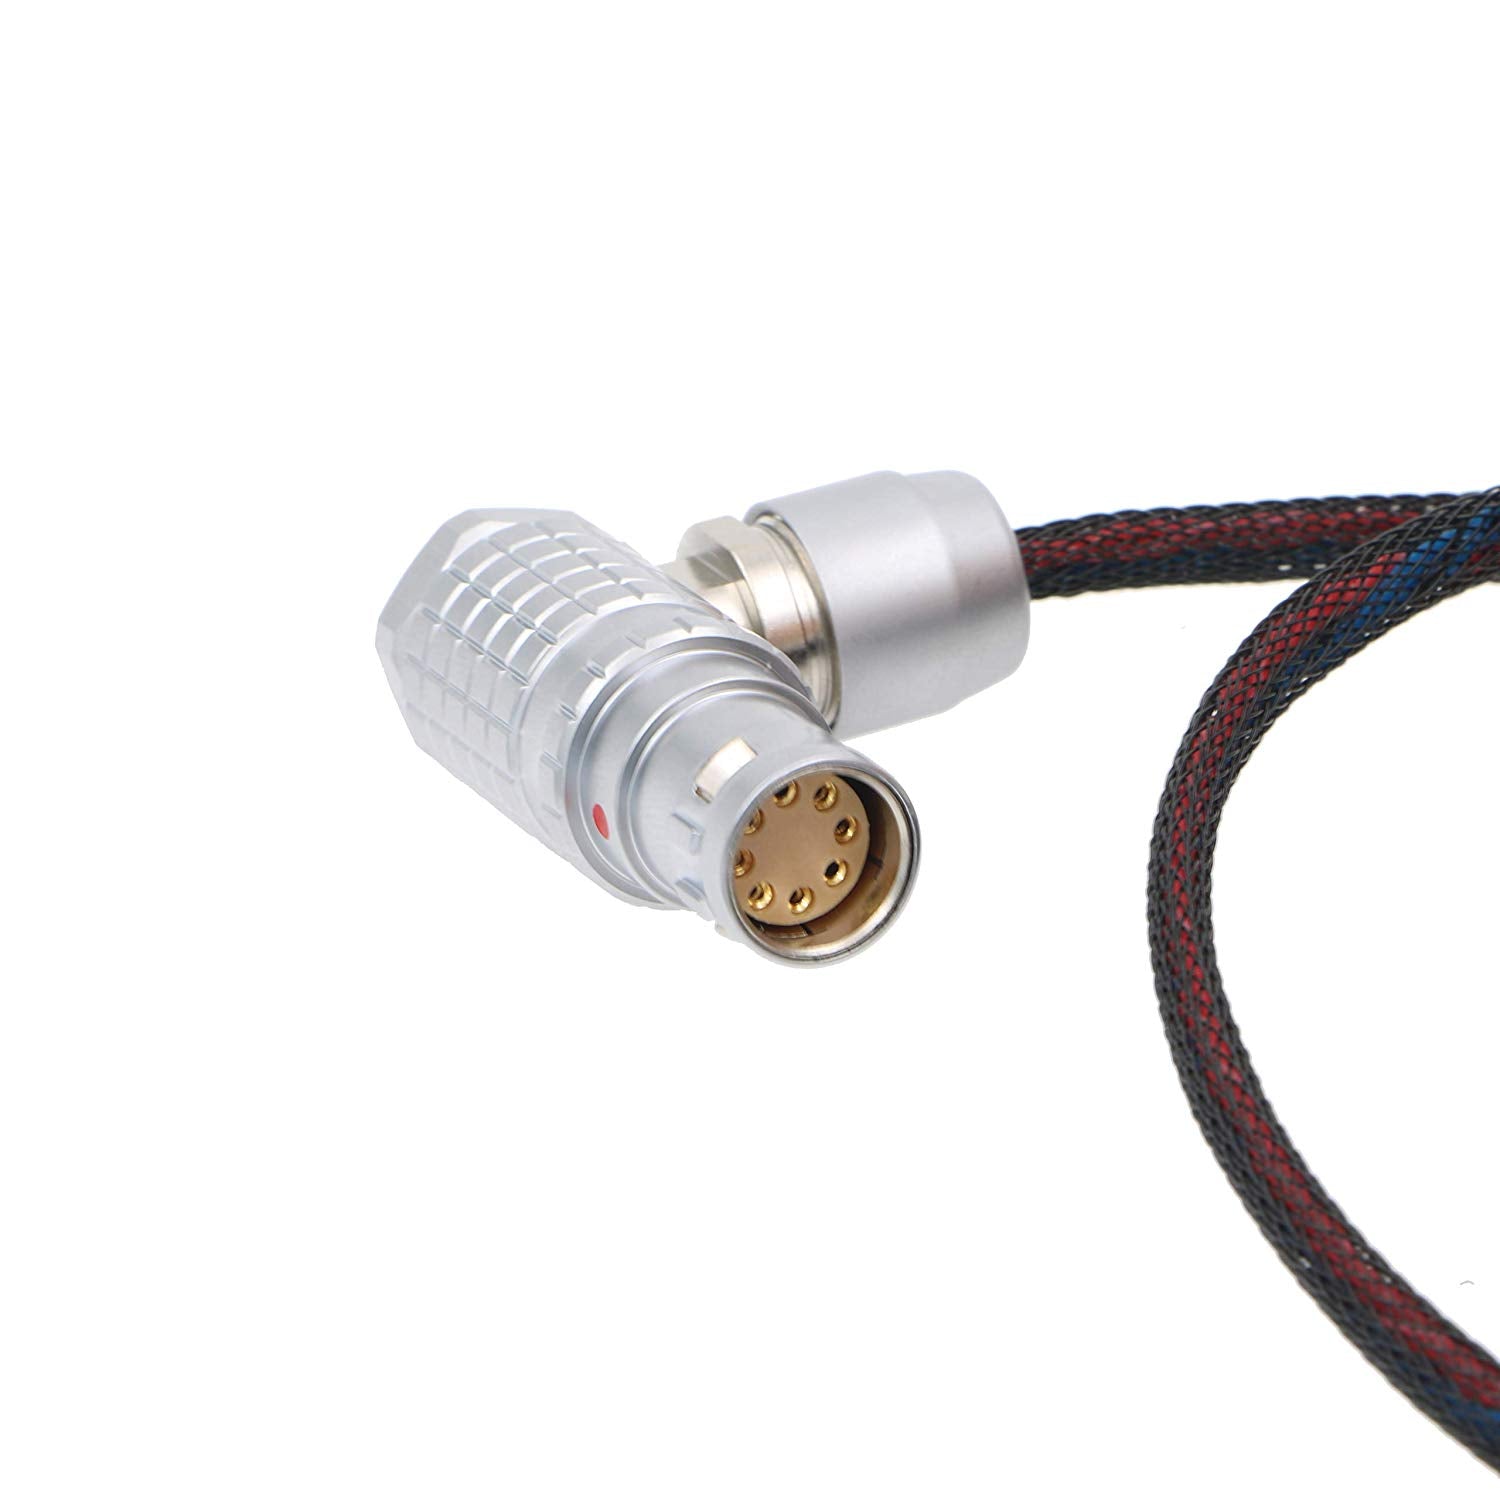 Alvin's Cables Arri Alexa Mini-Kamera, flexibles Lichtstromkabel, 8-polig, rechtwinklig zu D TAP